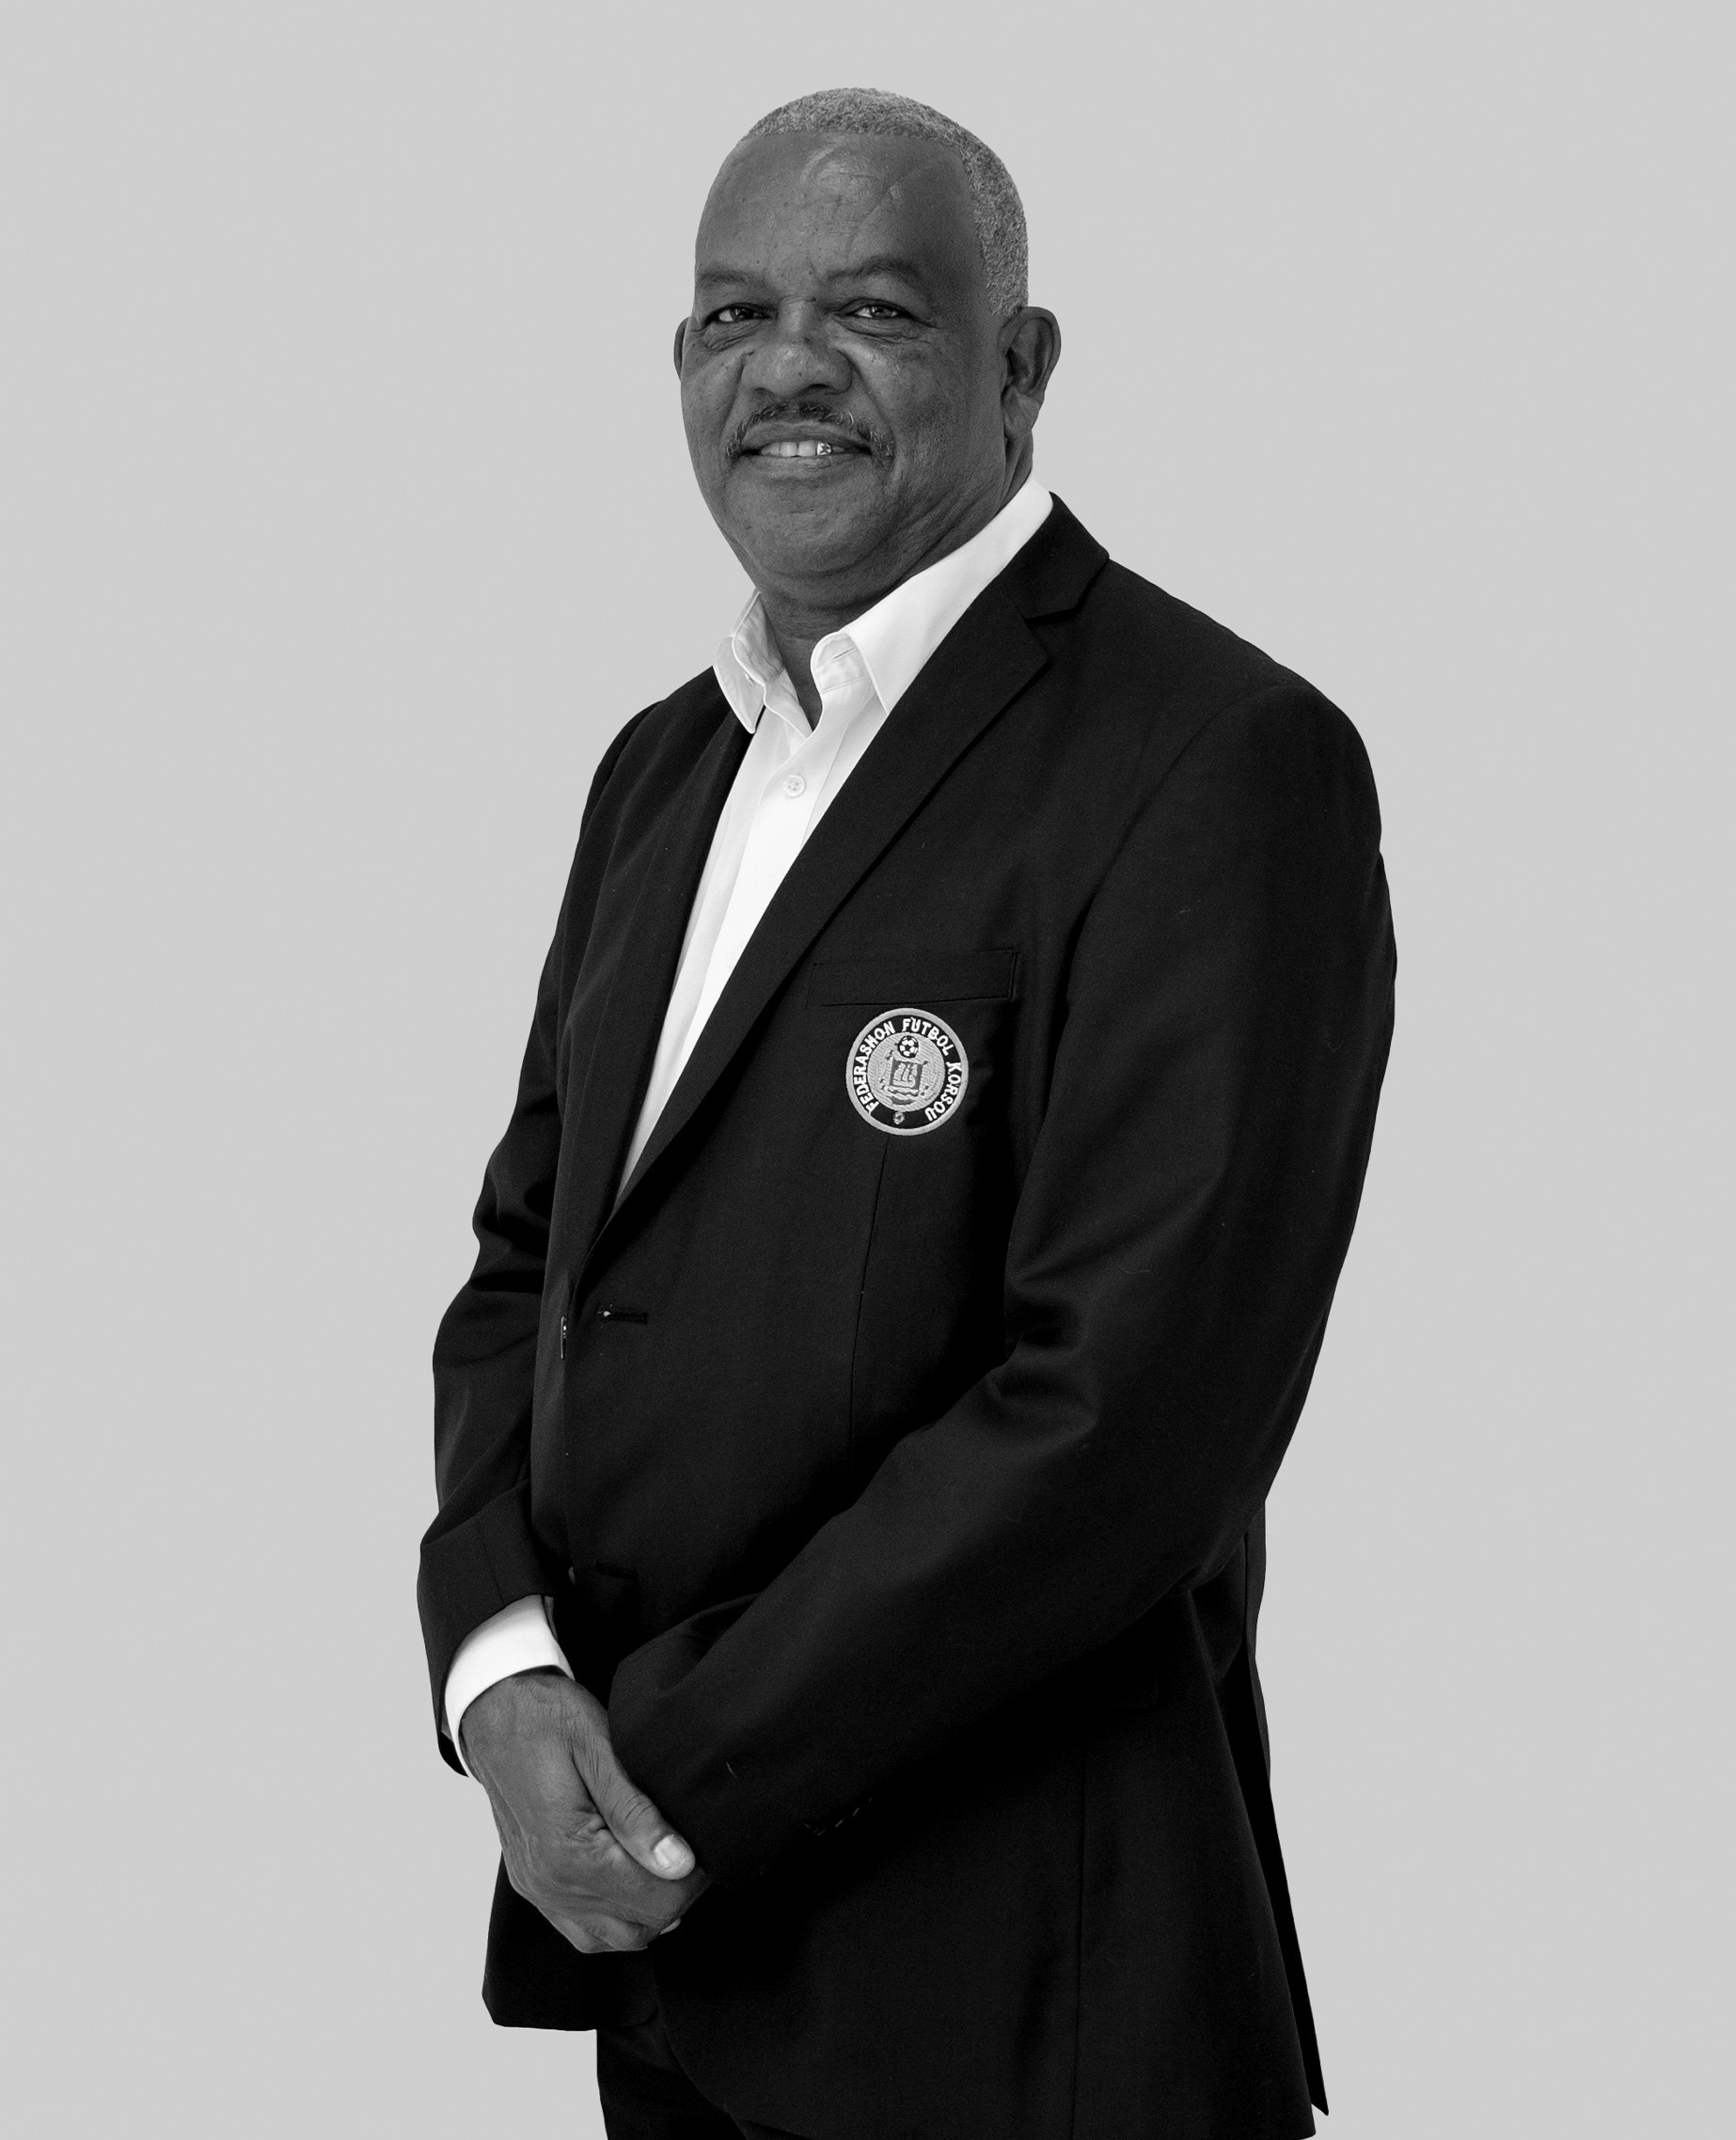 Gregory Djaoen, is a board member of Curacao Football Federation.